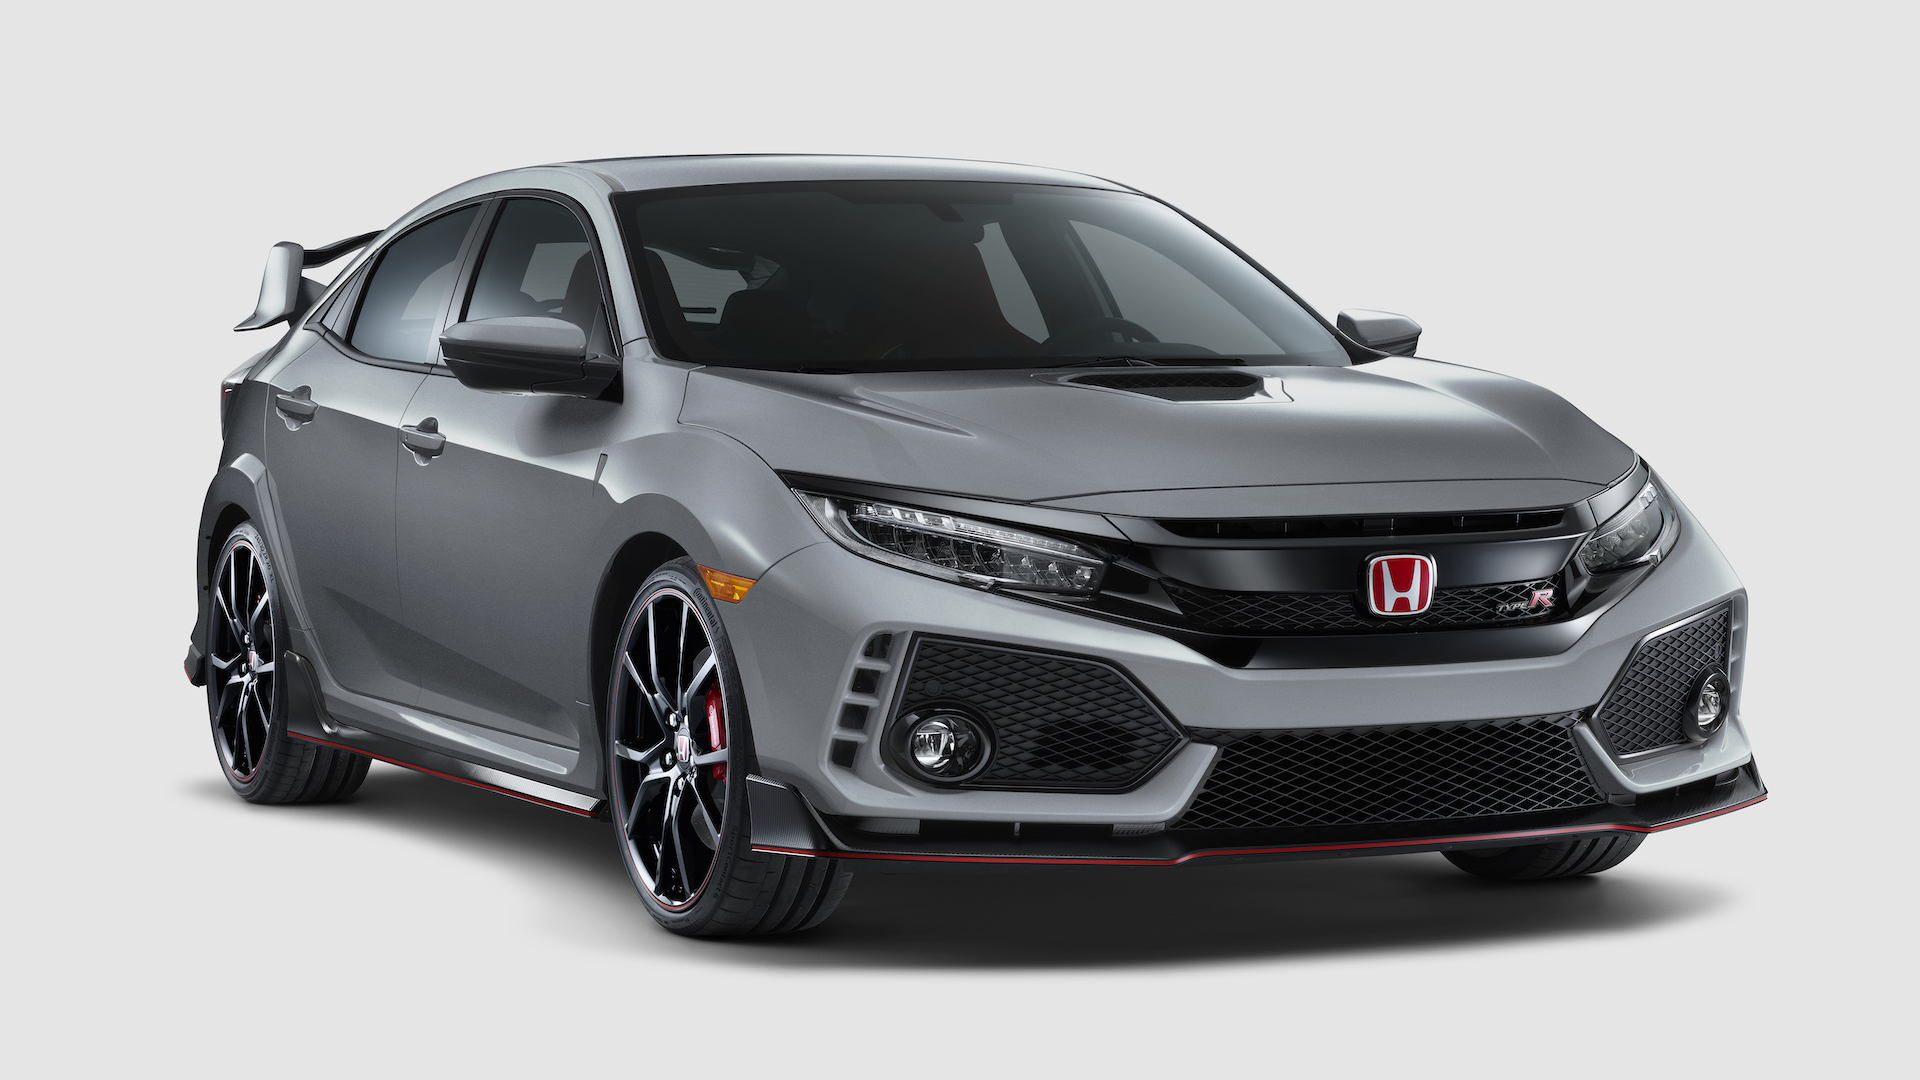 2019 Honda Civic Type R receives round of updates, $36,595 starting price